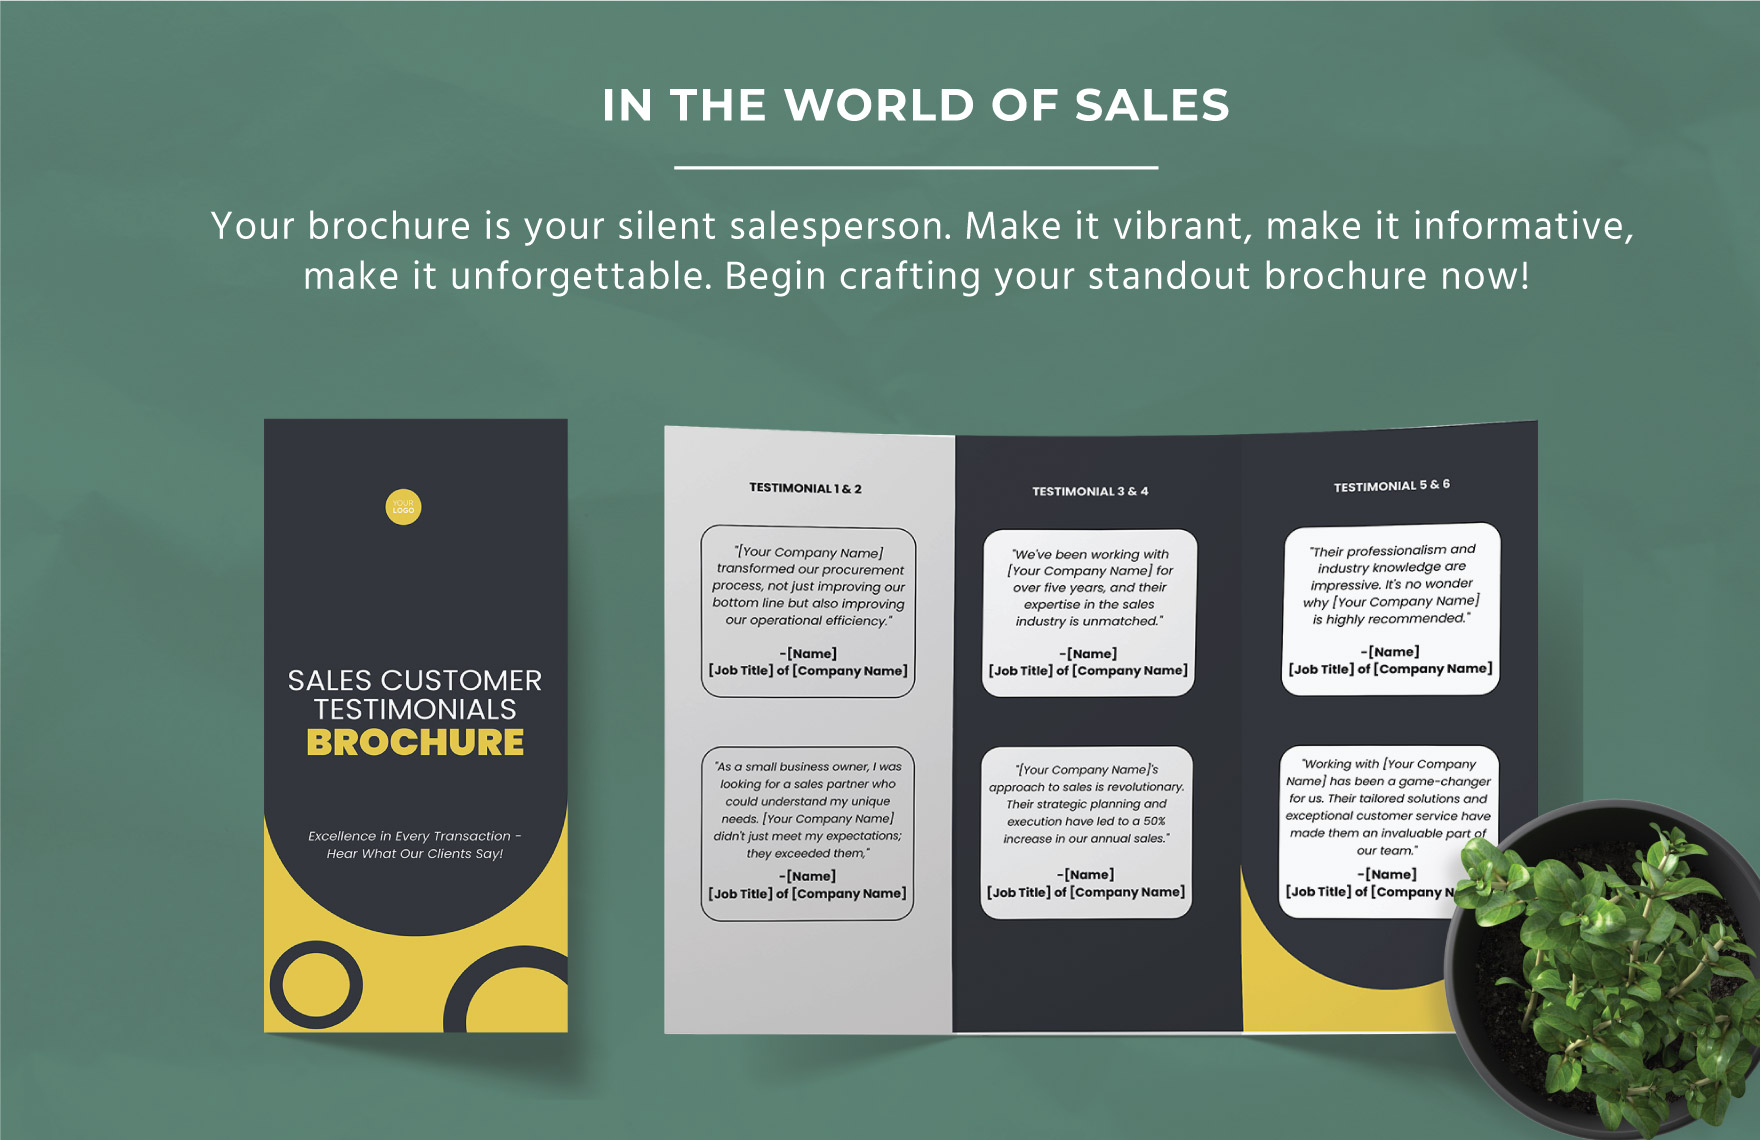 Sales Customer Testimonials Brochure  Template